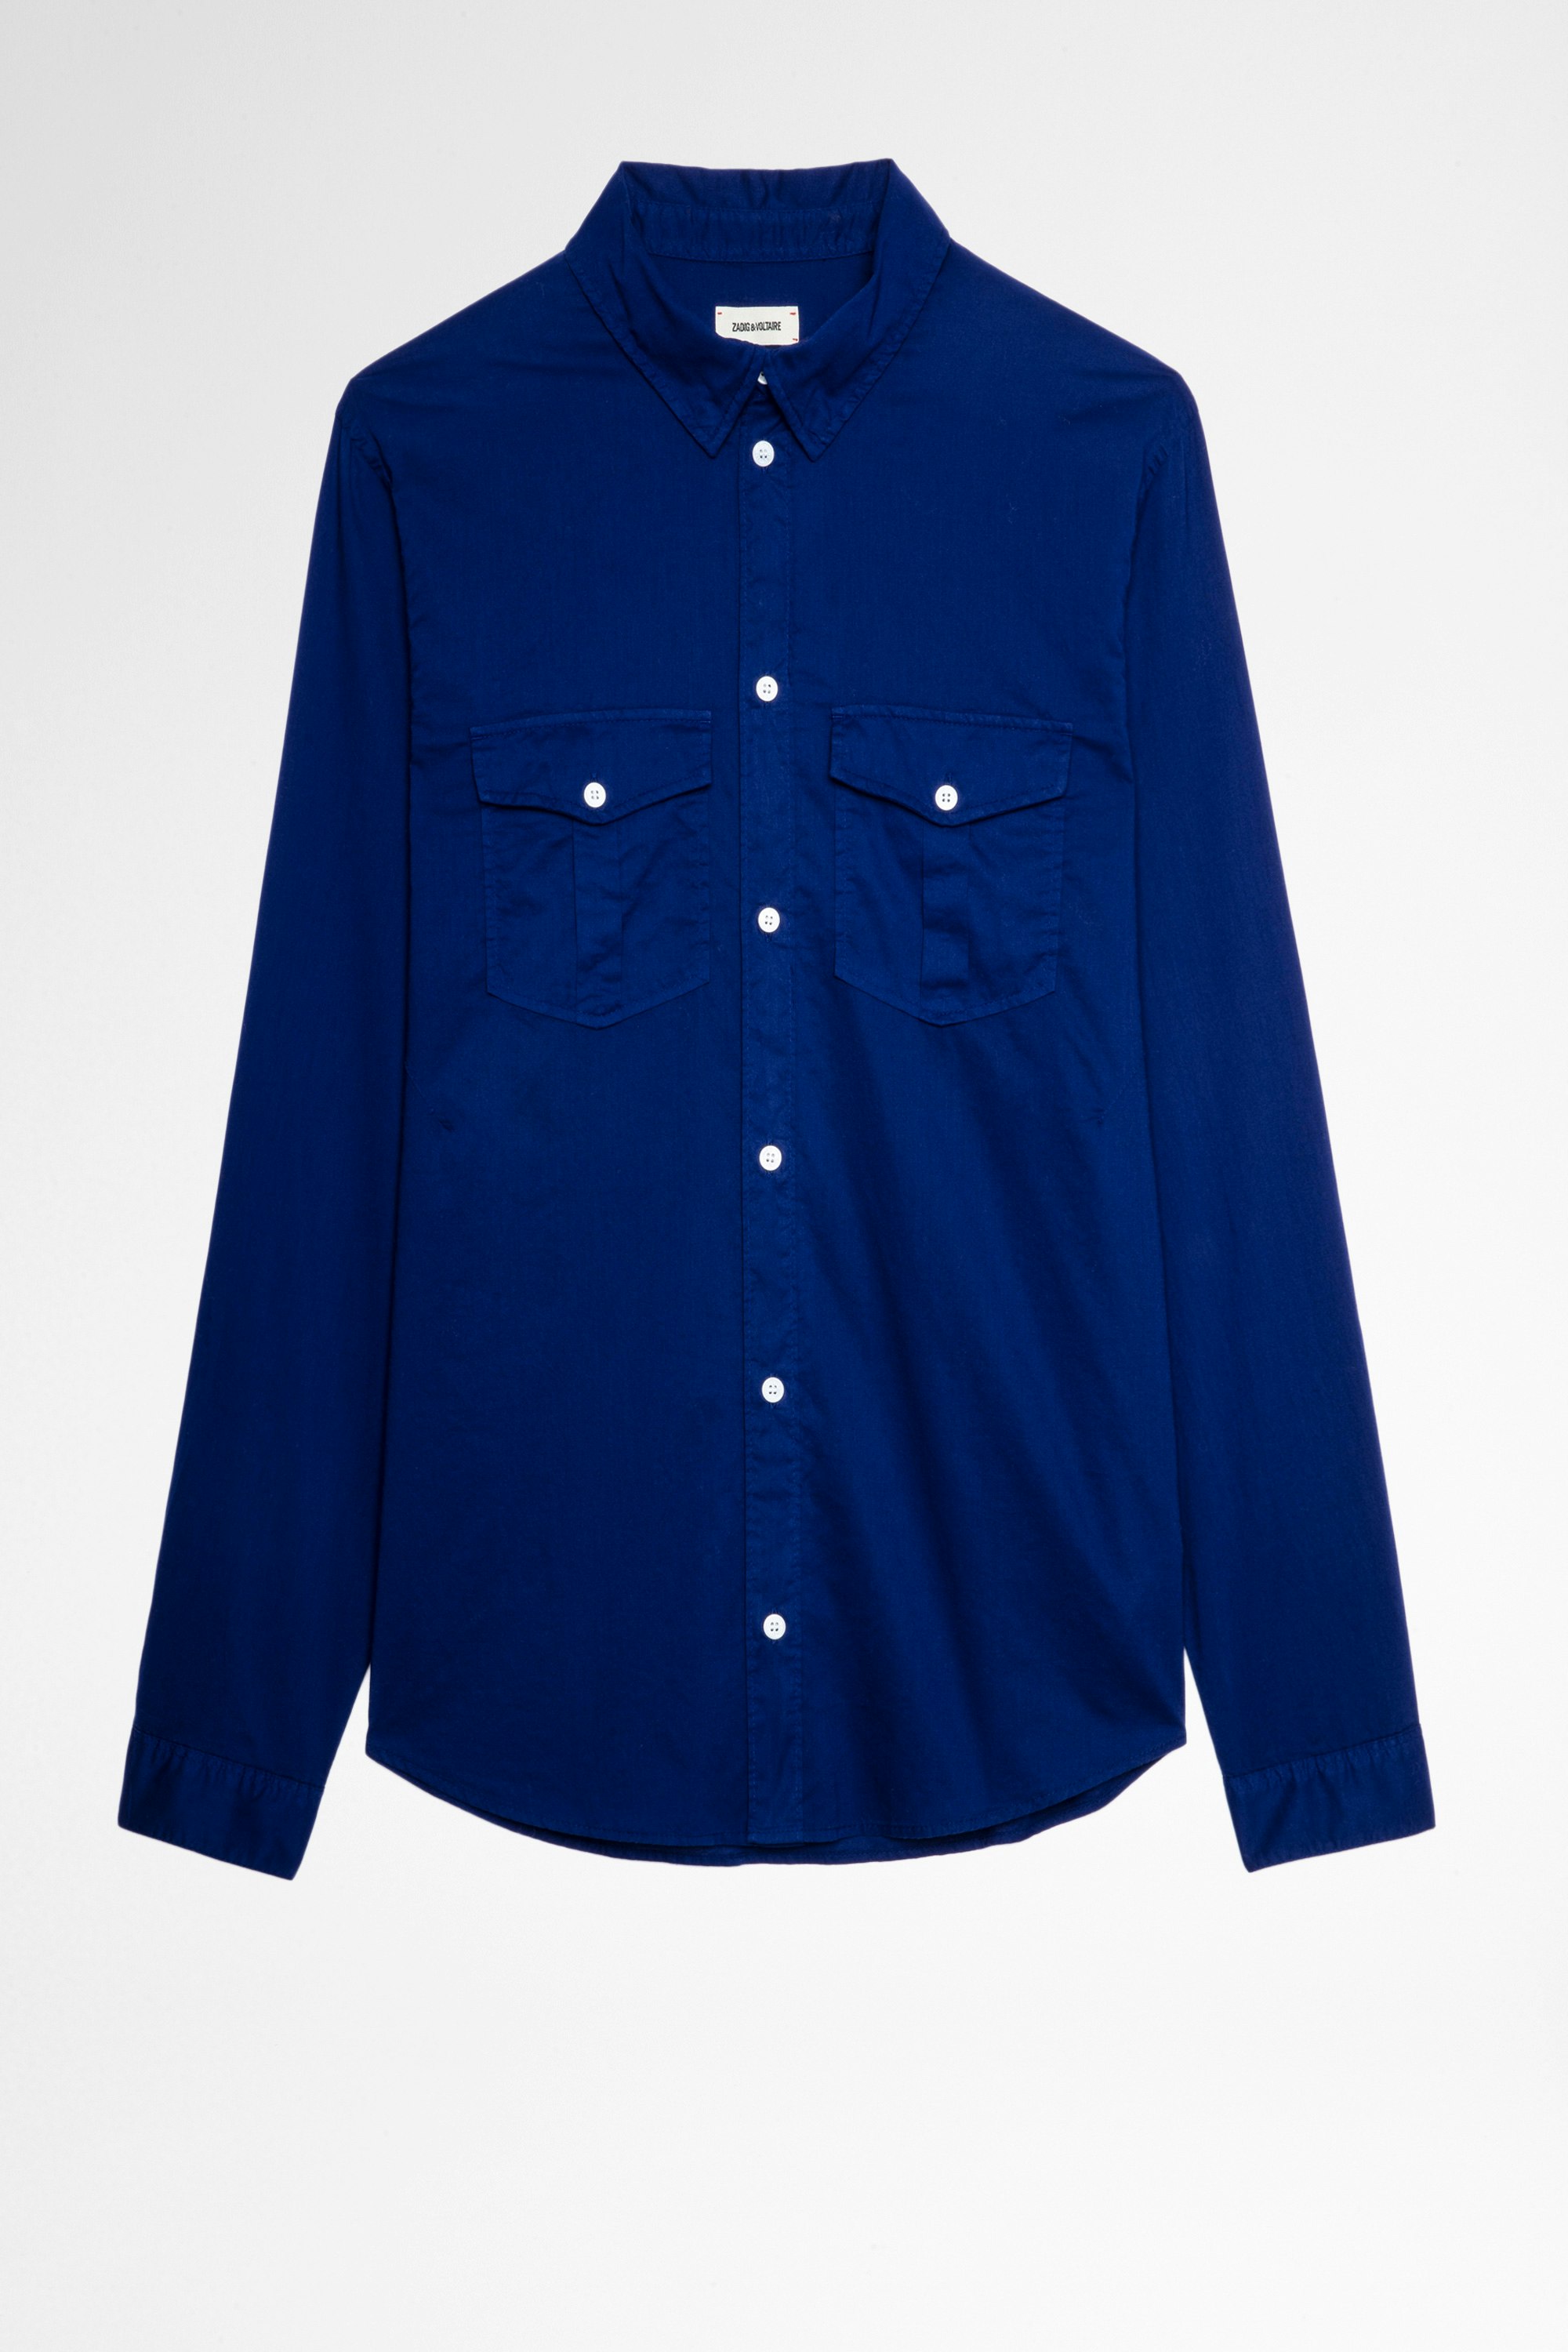 Thibaut Shirt Men’s royal blue cotton shirt